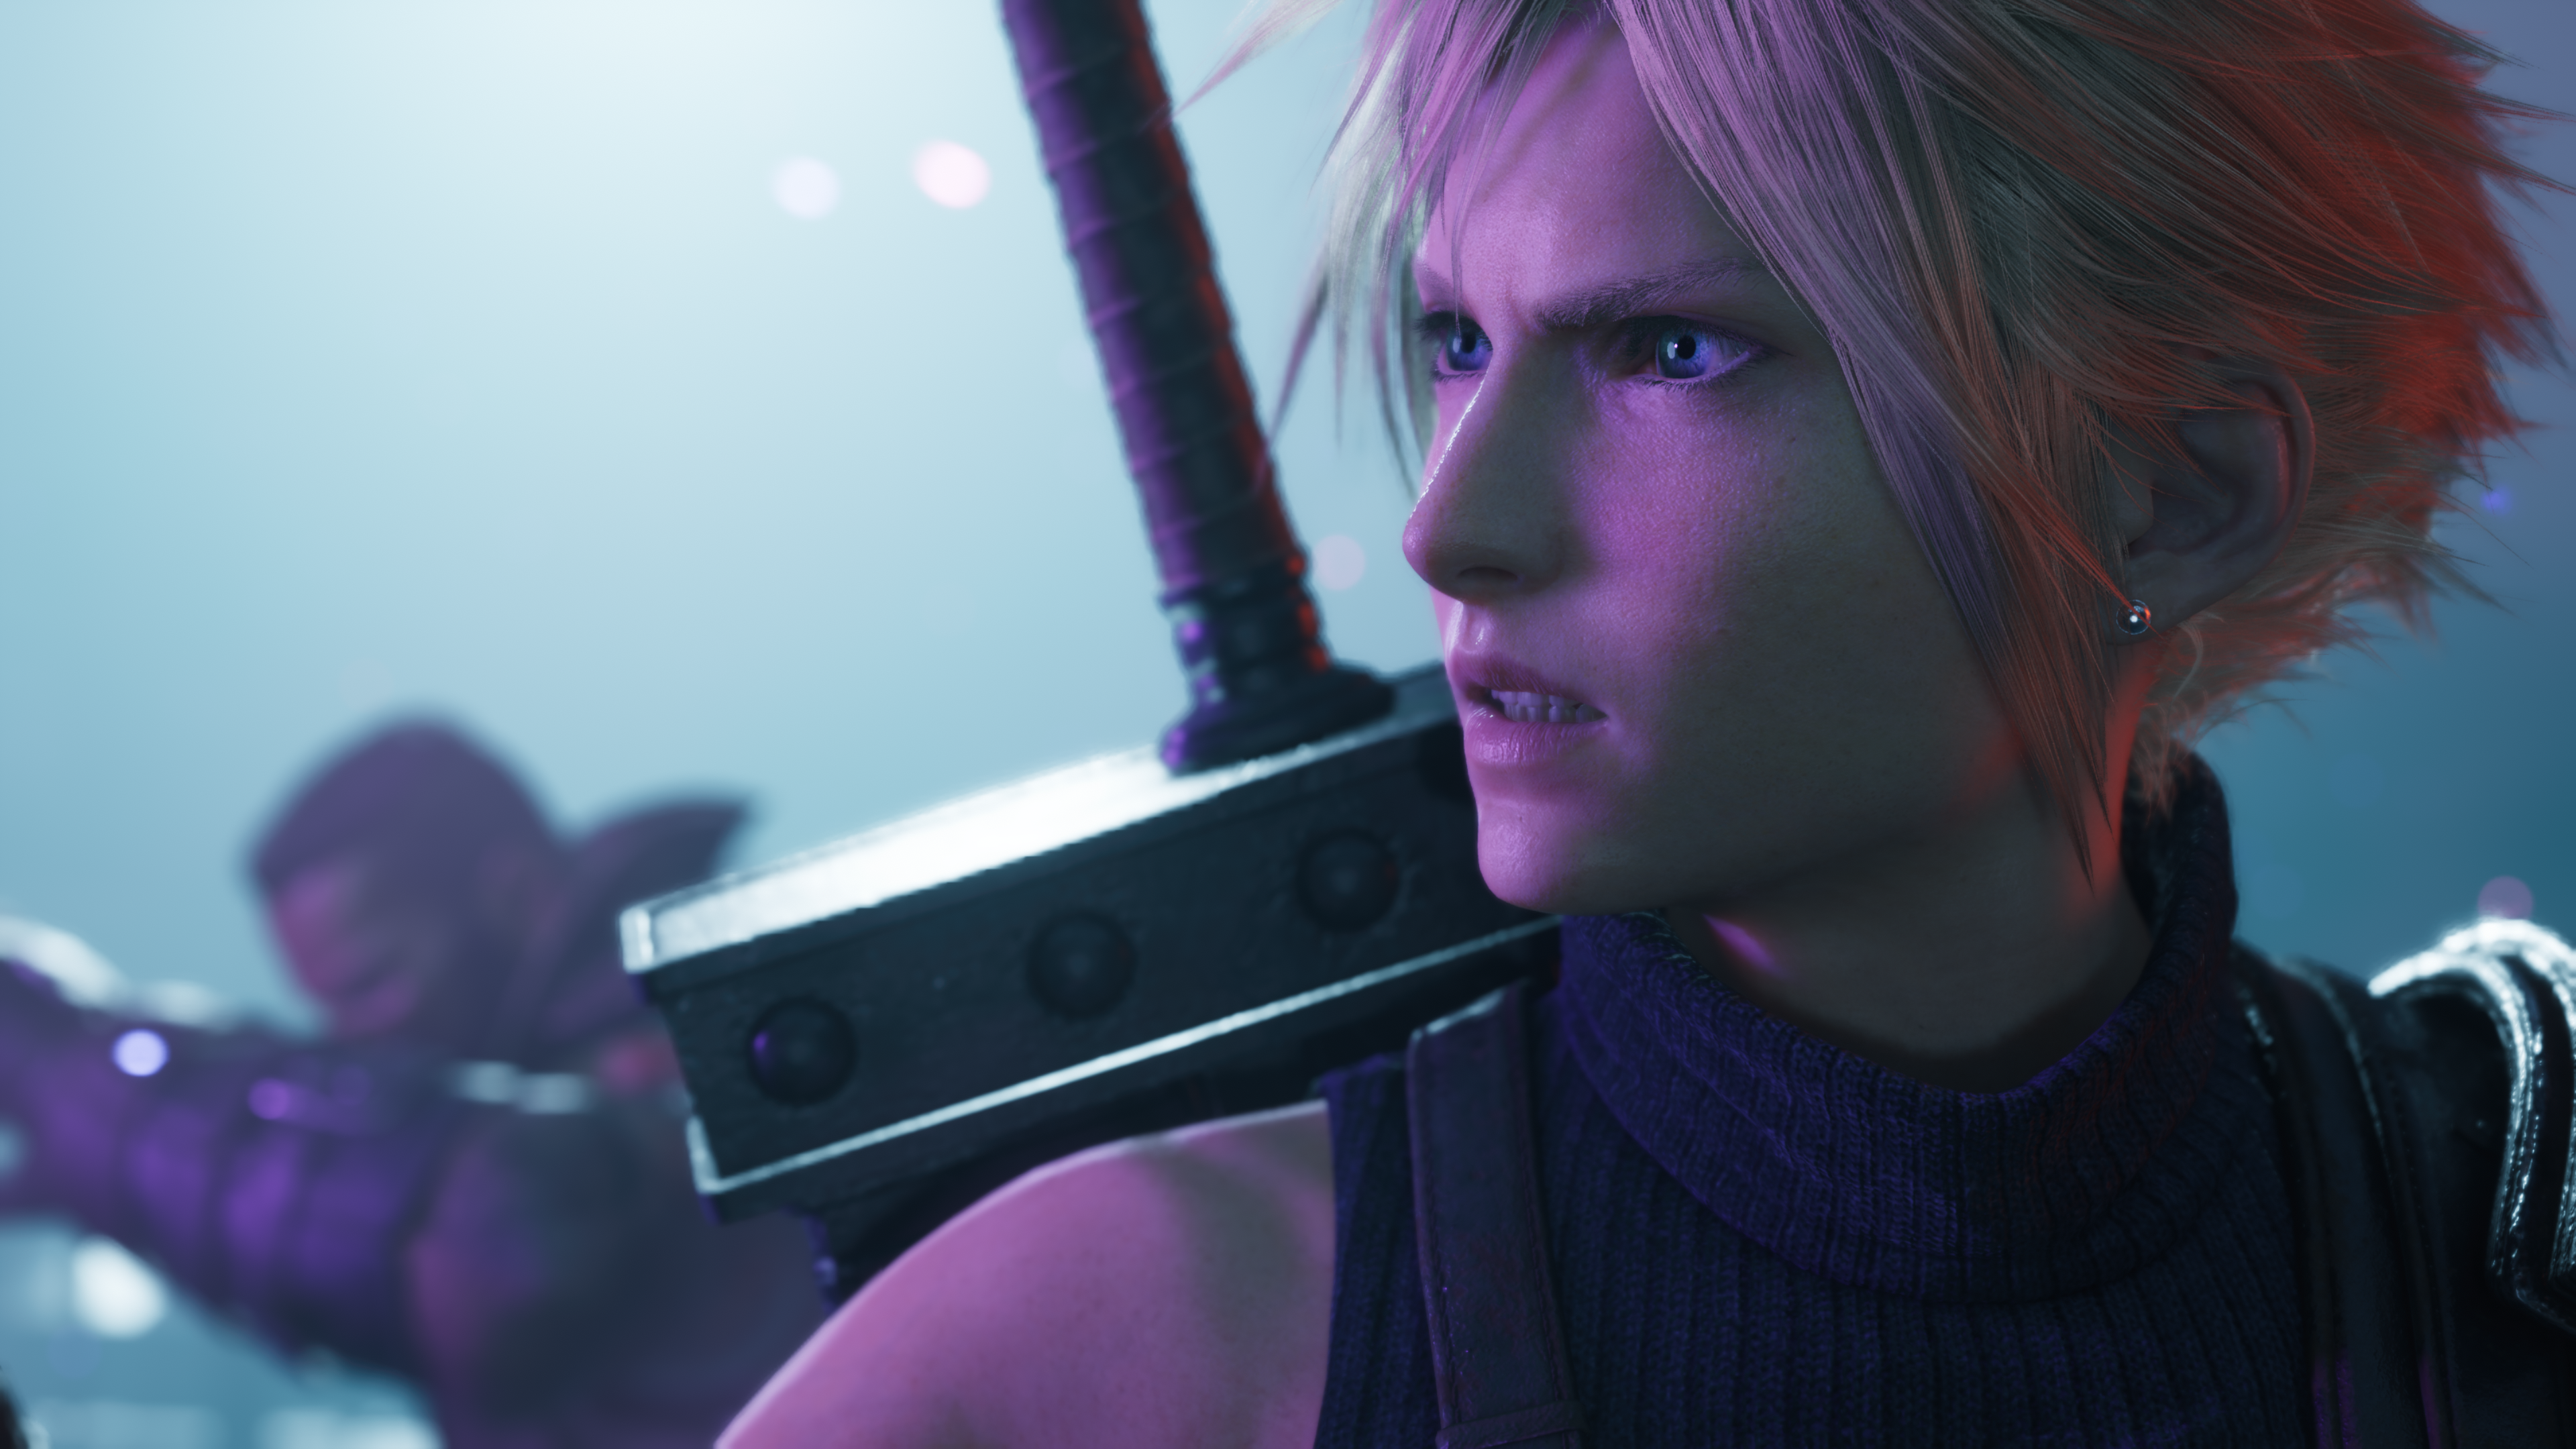 Final Fantasy VII 5] Rebirth [PlayStation 